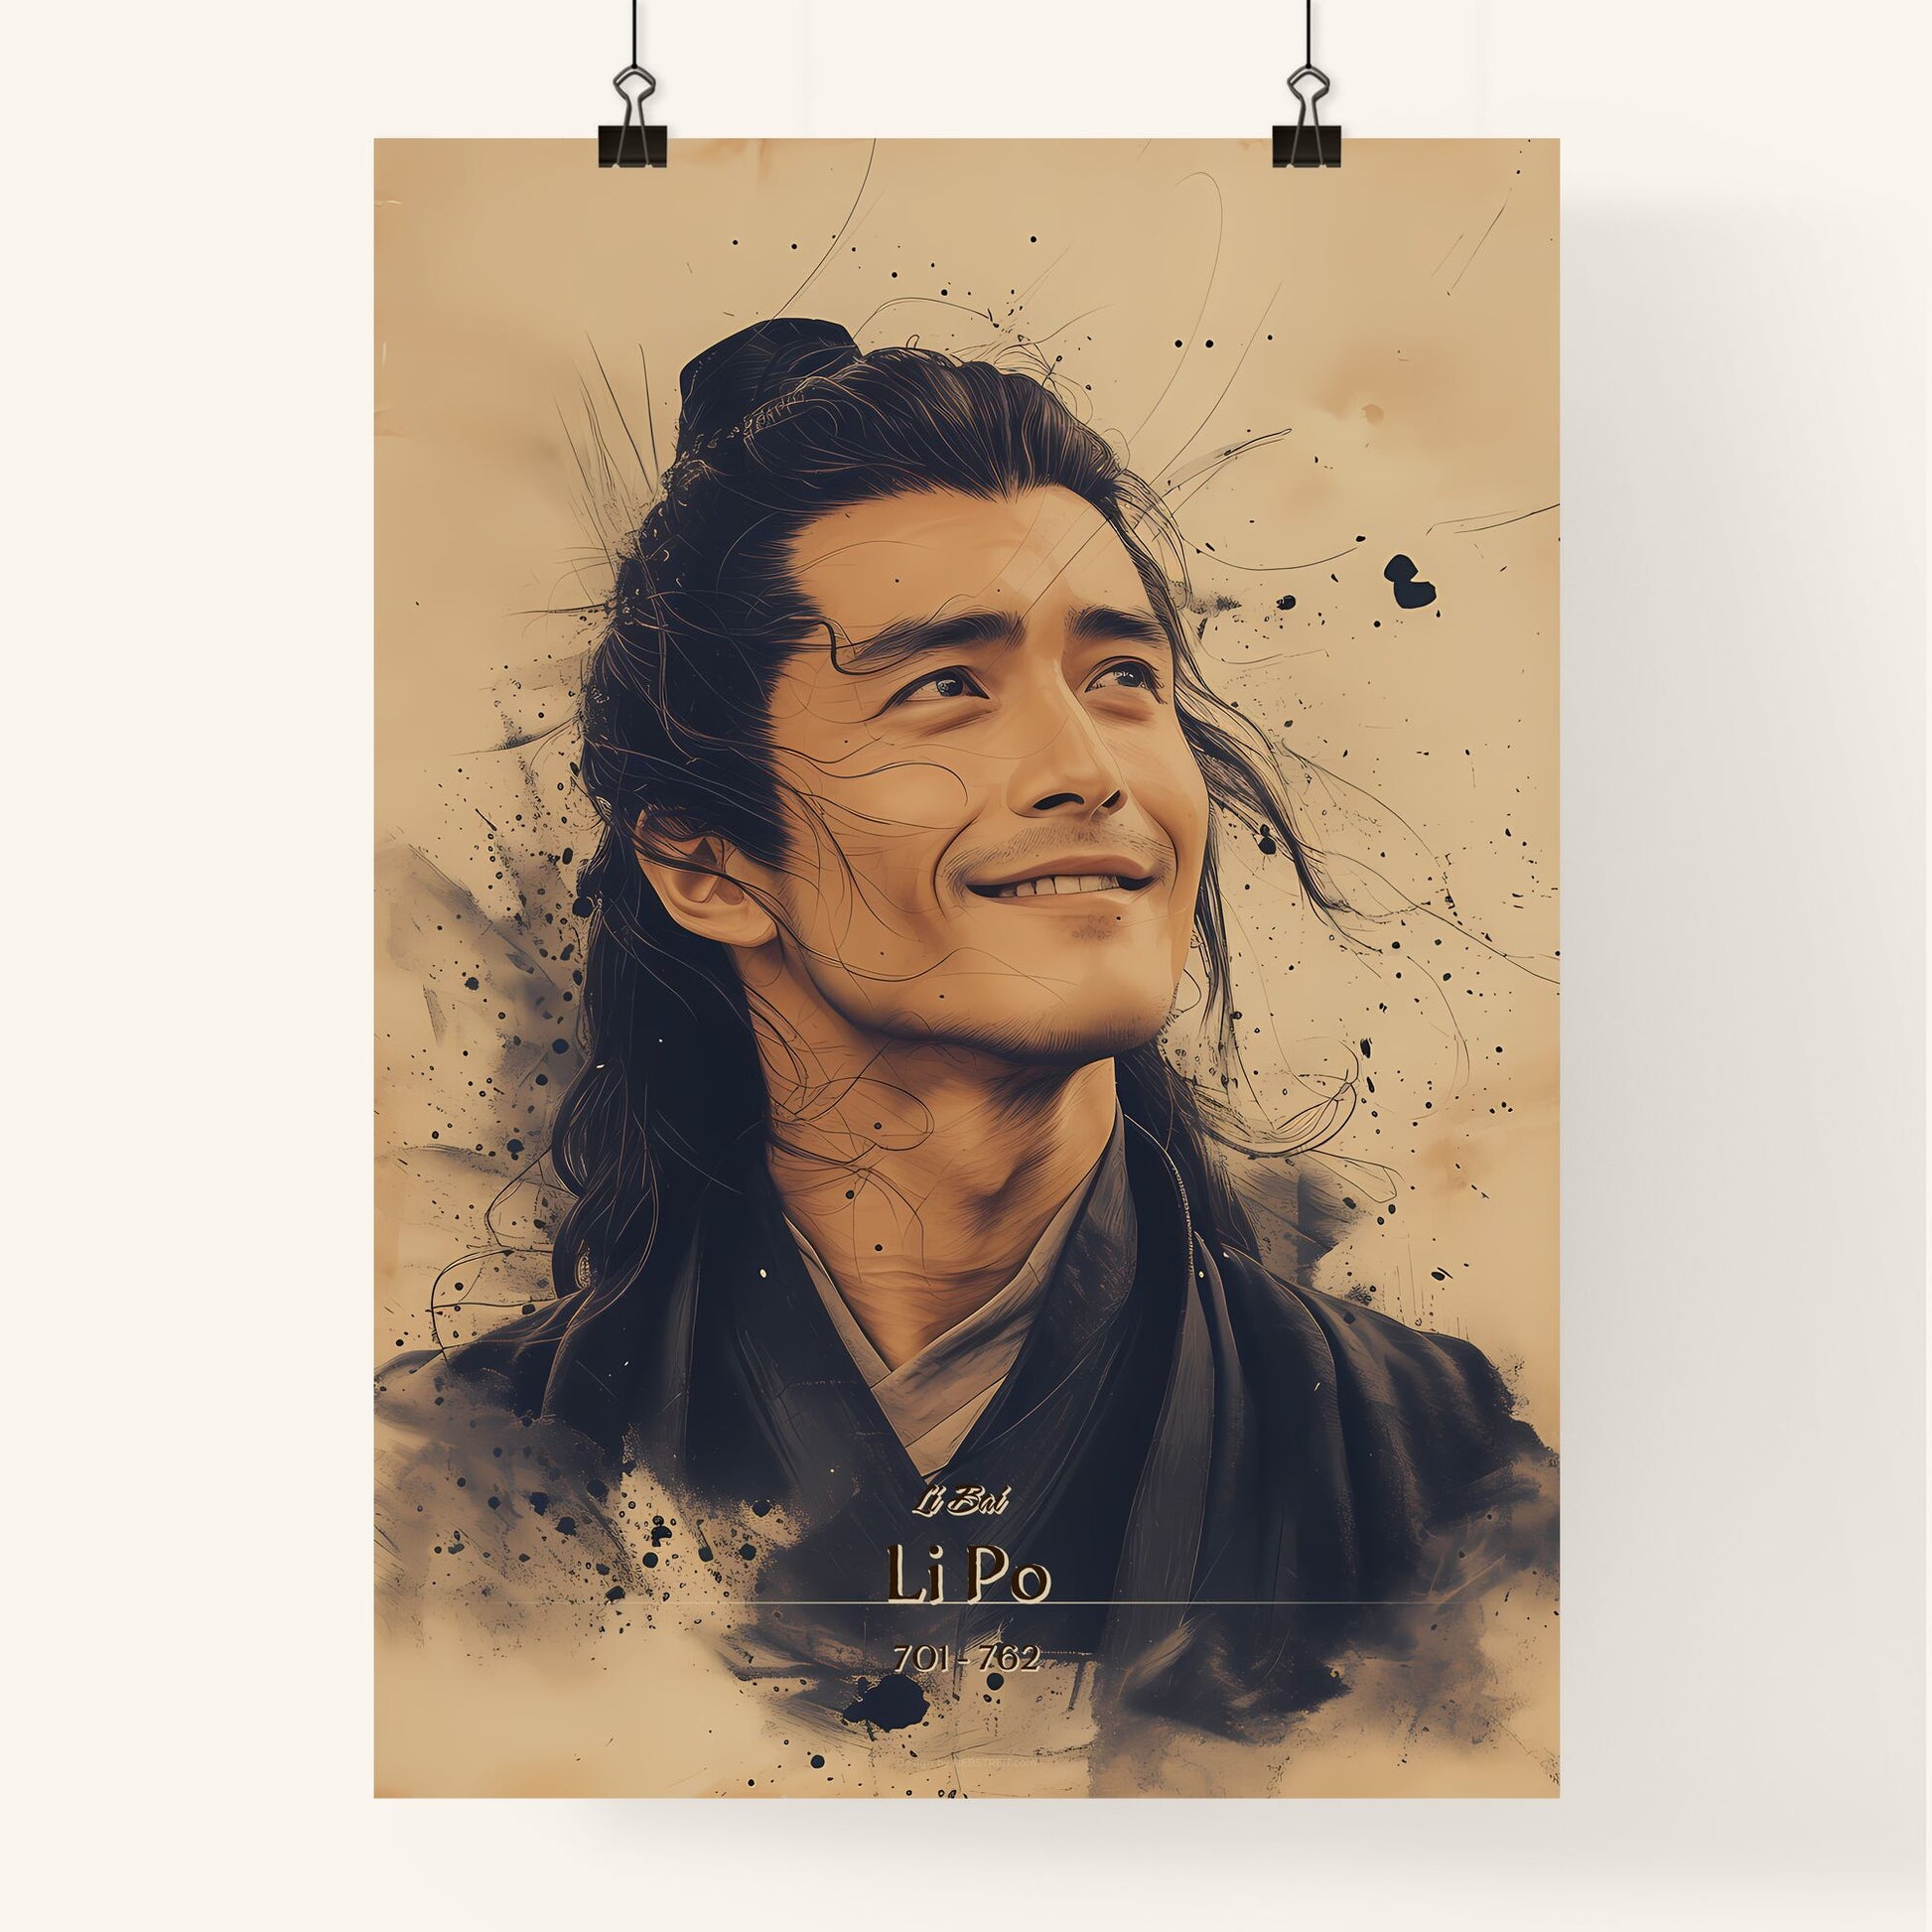 Li Bai, Li Po, 701 - 762, A Poster of a man with long hair and a black robe Default Title